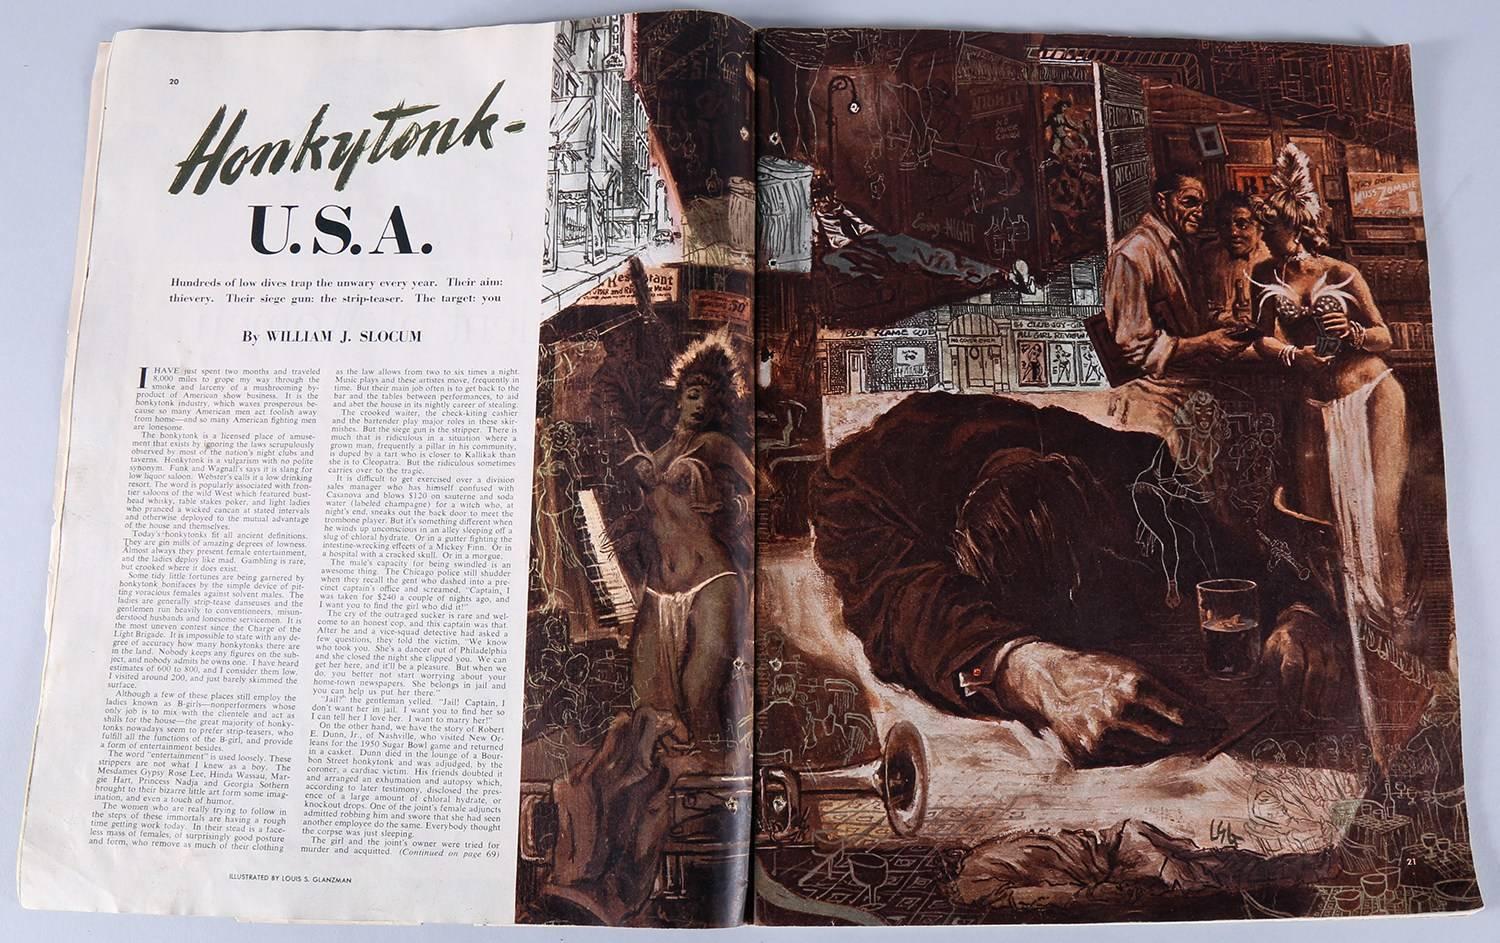 Honkytonk-U.S.A. - American Realist Painting by Louis Glanzman